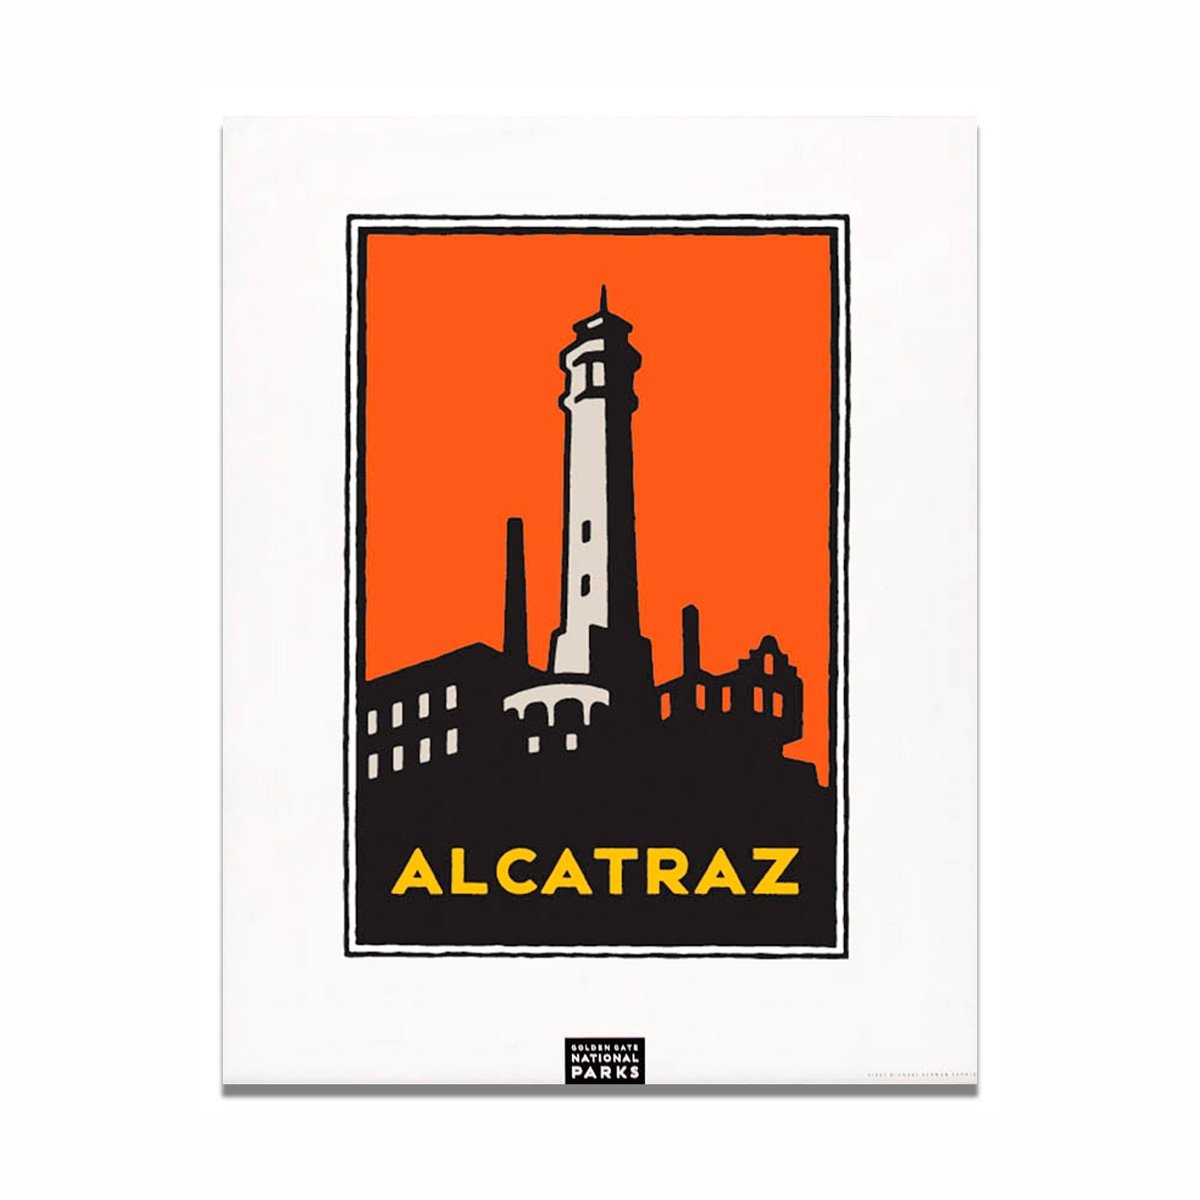 22 x 28 inch Alcatraz Island silk-screened poster, art by Michael Schwab.